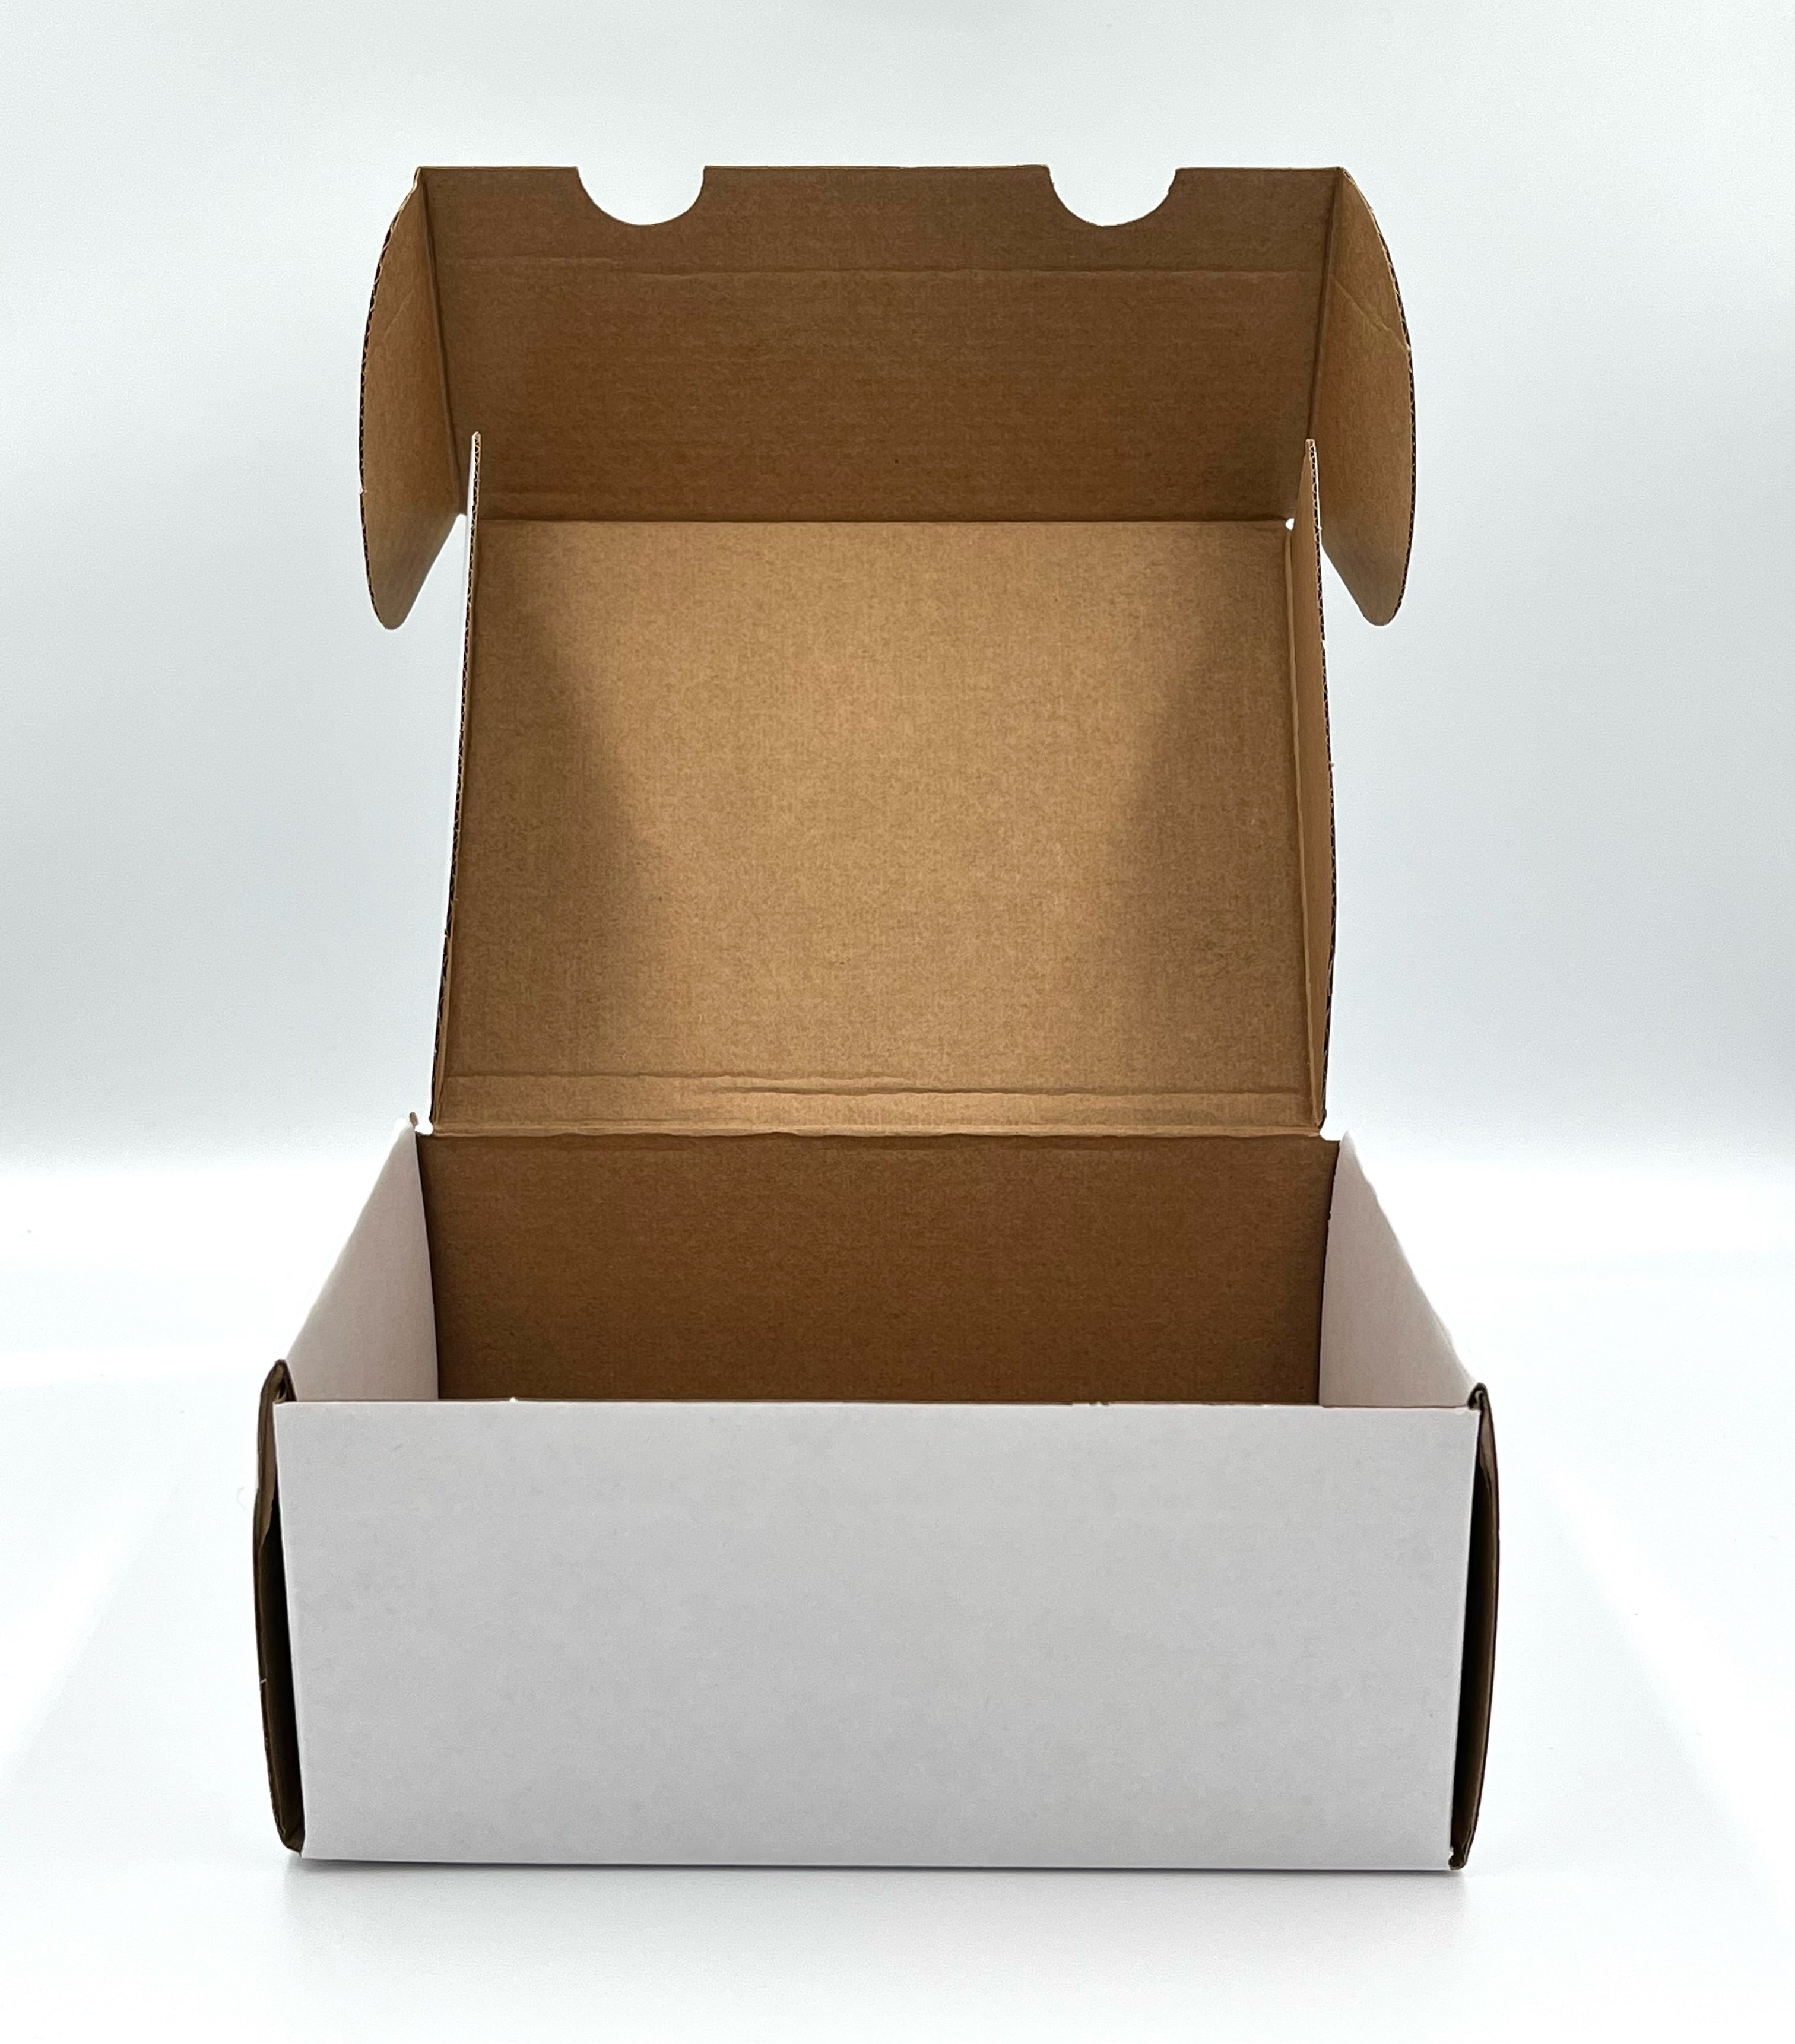 Ecopack e-commerce box - two-sided digital printing